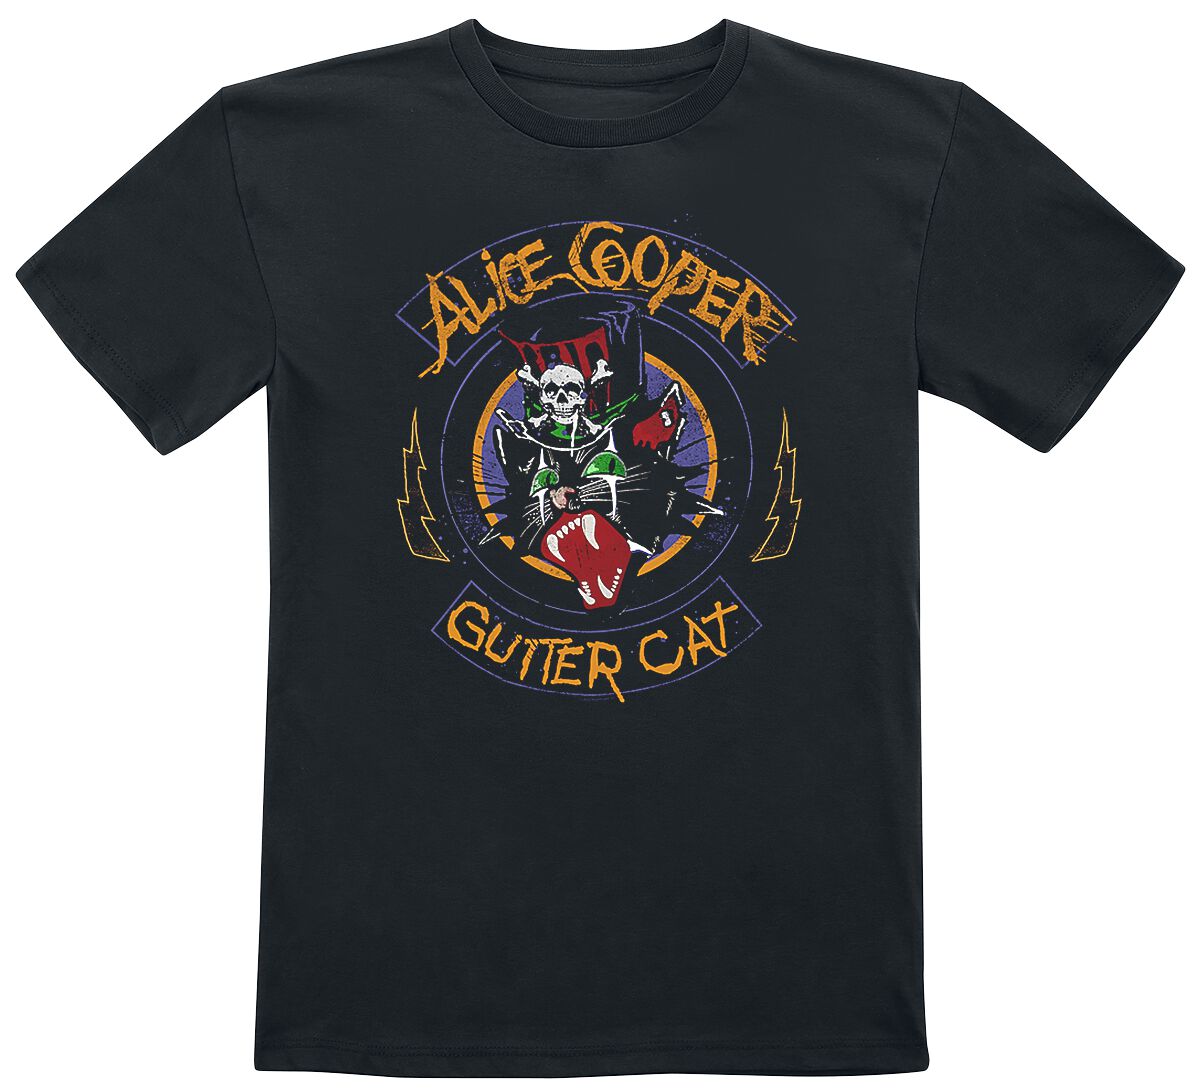 Alice Cooper Gutter Cat T-Shirt black